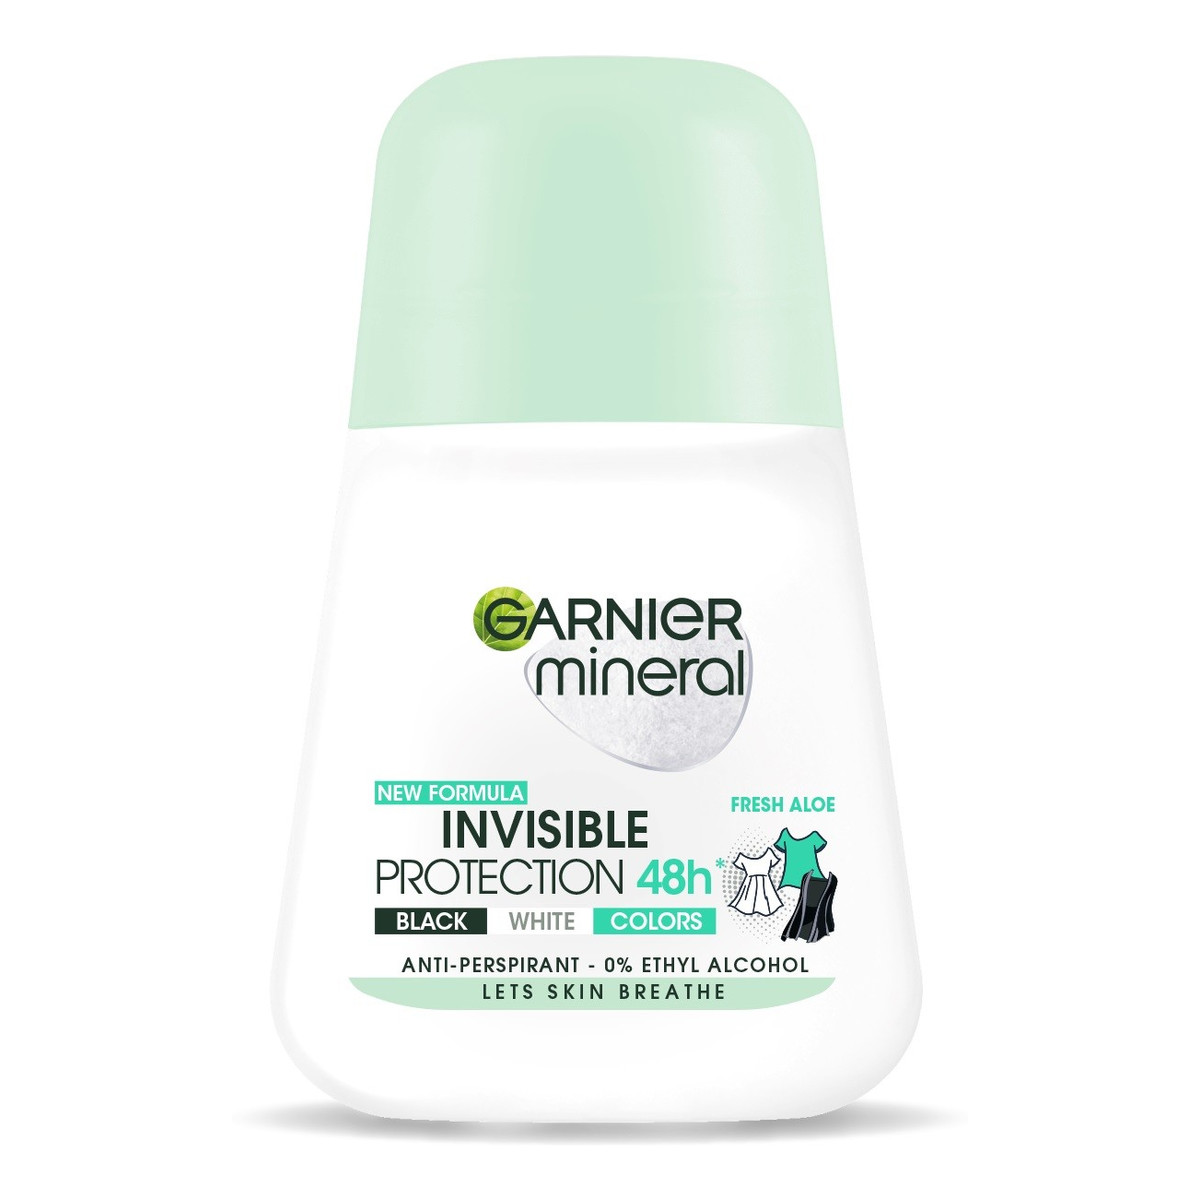 Garnier Mineral Dezodorant roll-on Invisible Protection 48h Fresh Aloe - Black White Colors 50ml